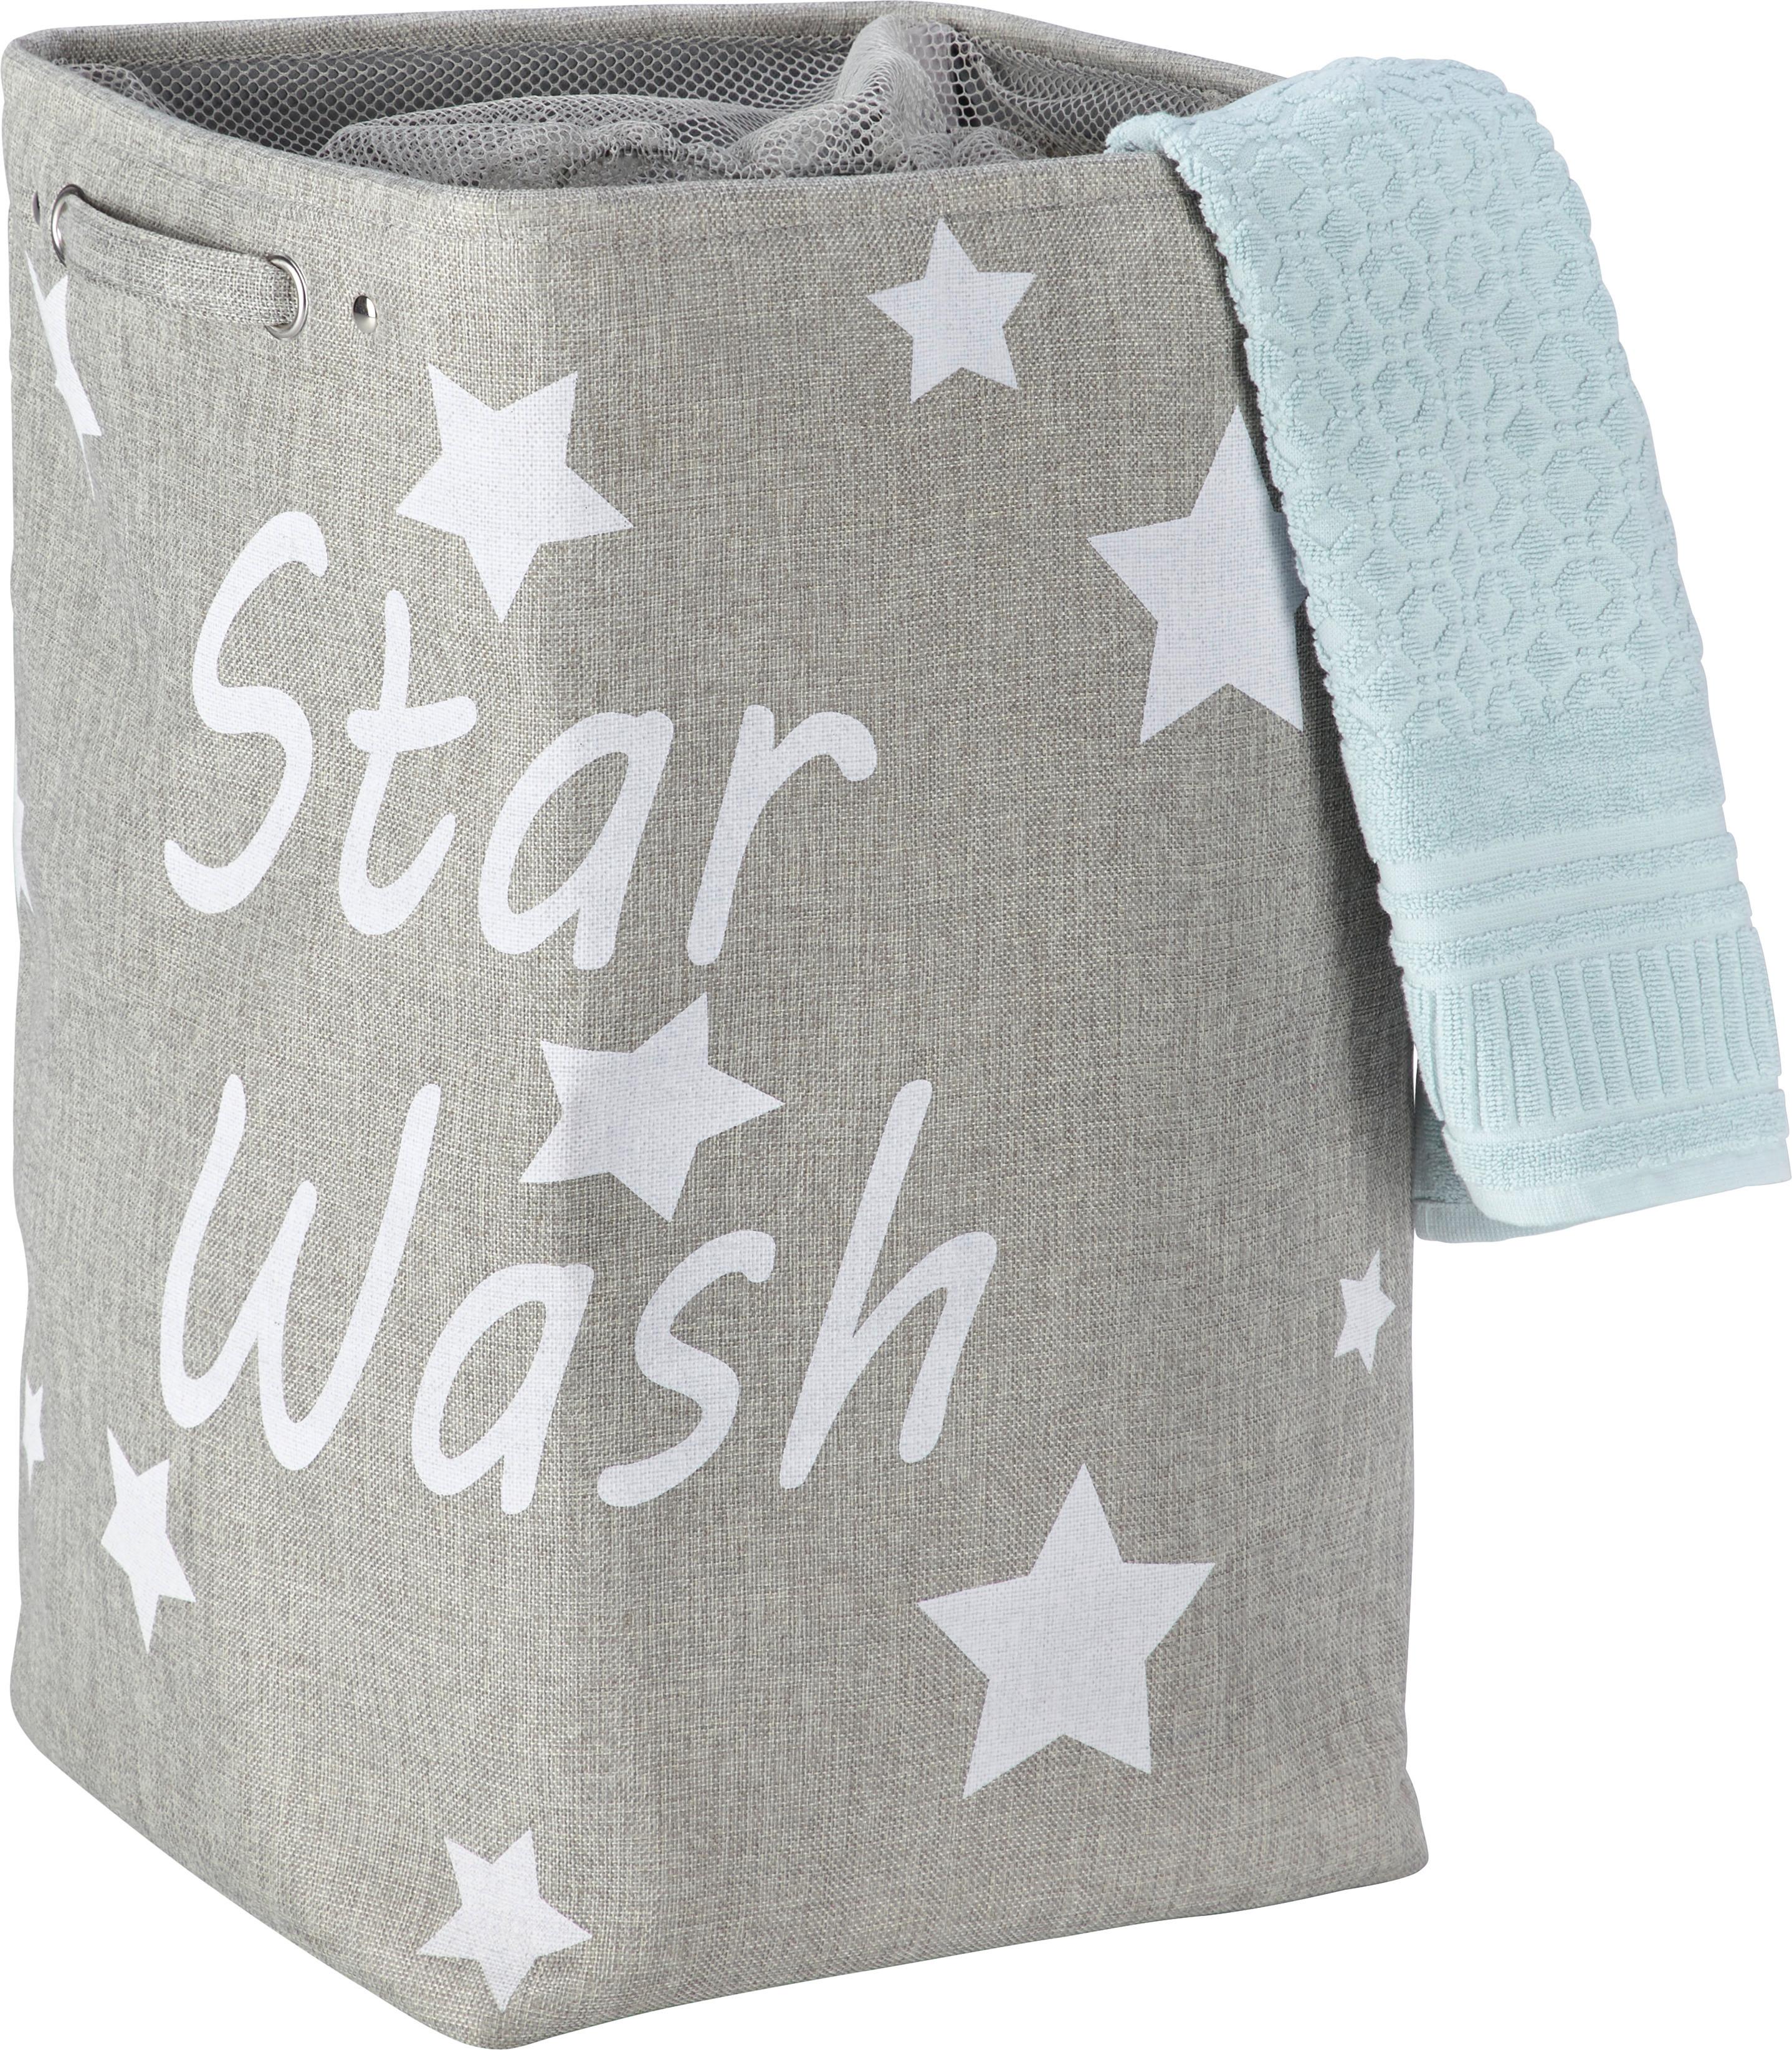 Wäschetonne Star Wash in Grau - Grau, Textil (36/56/36cm) - Modern Living